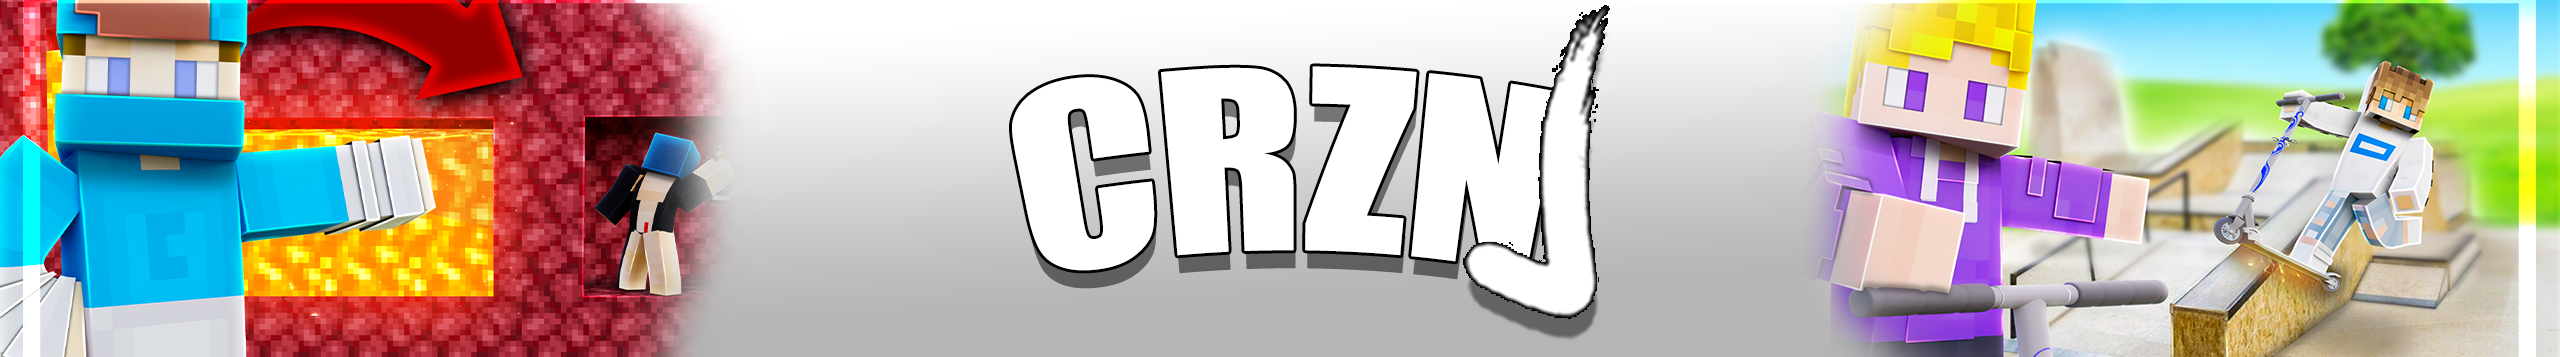 Cryzn .'s profile banner